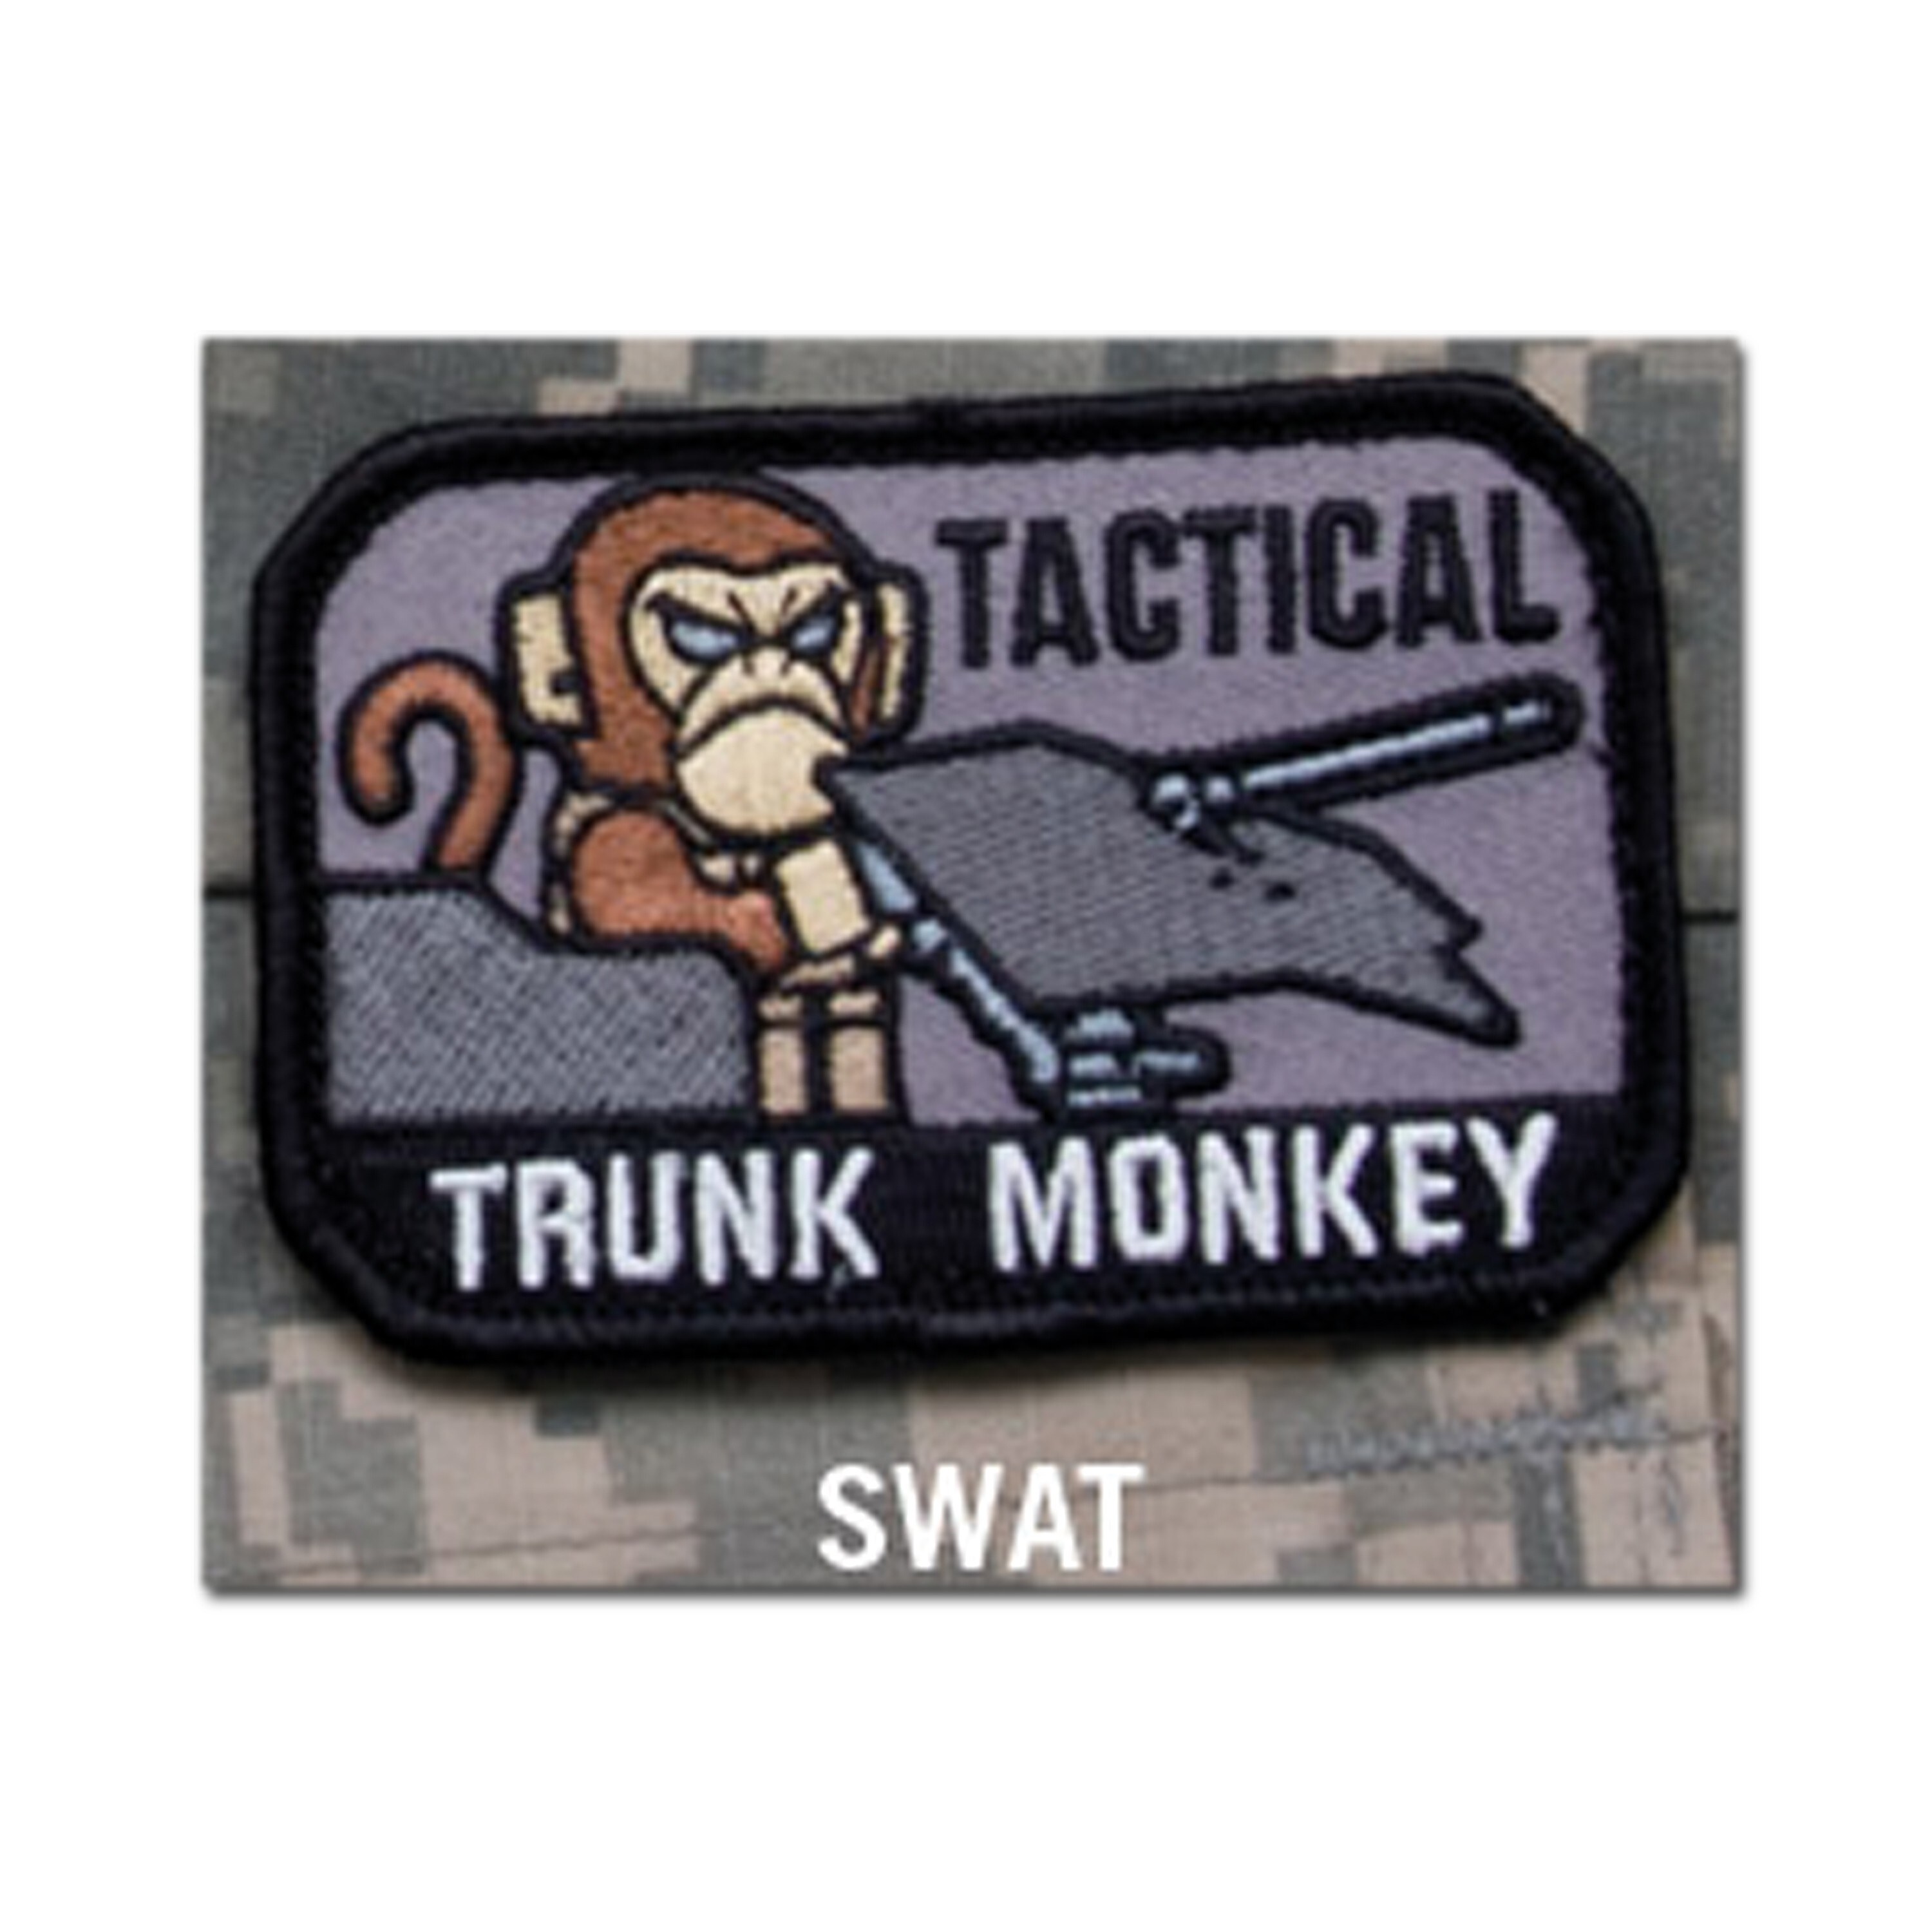 MilSpecMonkey Patch Tactical Trunk Monkey swat | MilSpecMonkey Patch ...